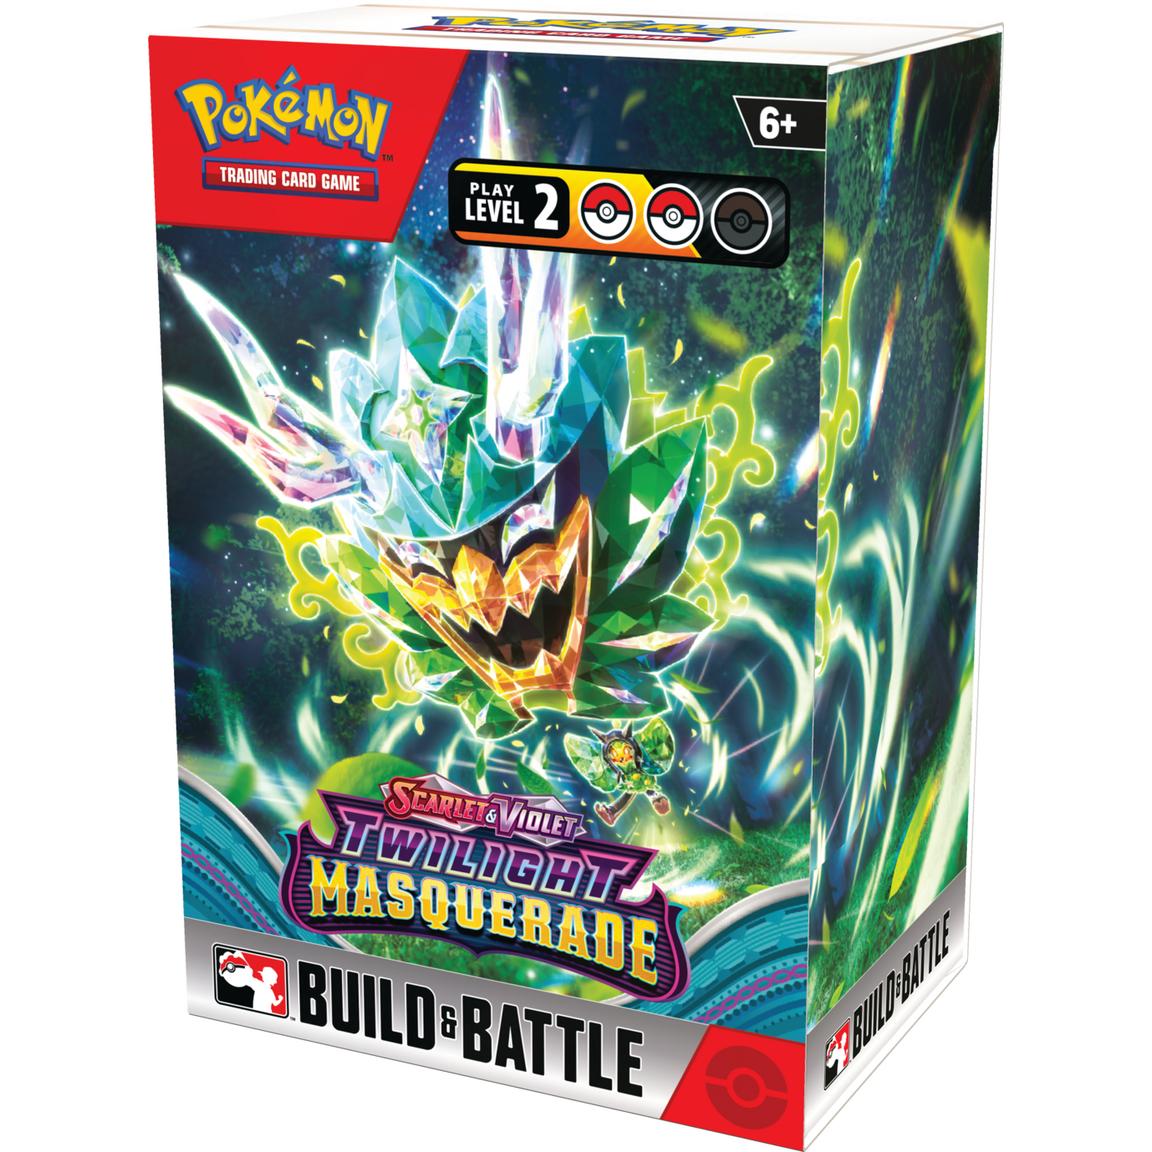 Pokemon Trading Card Game: Twilight Masquerade Build and Battle Box